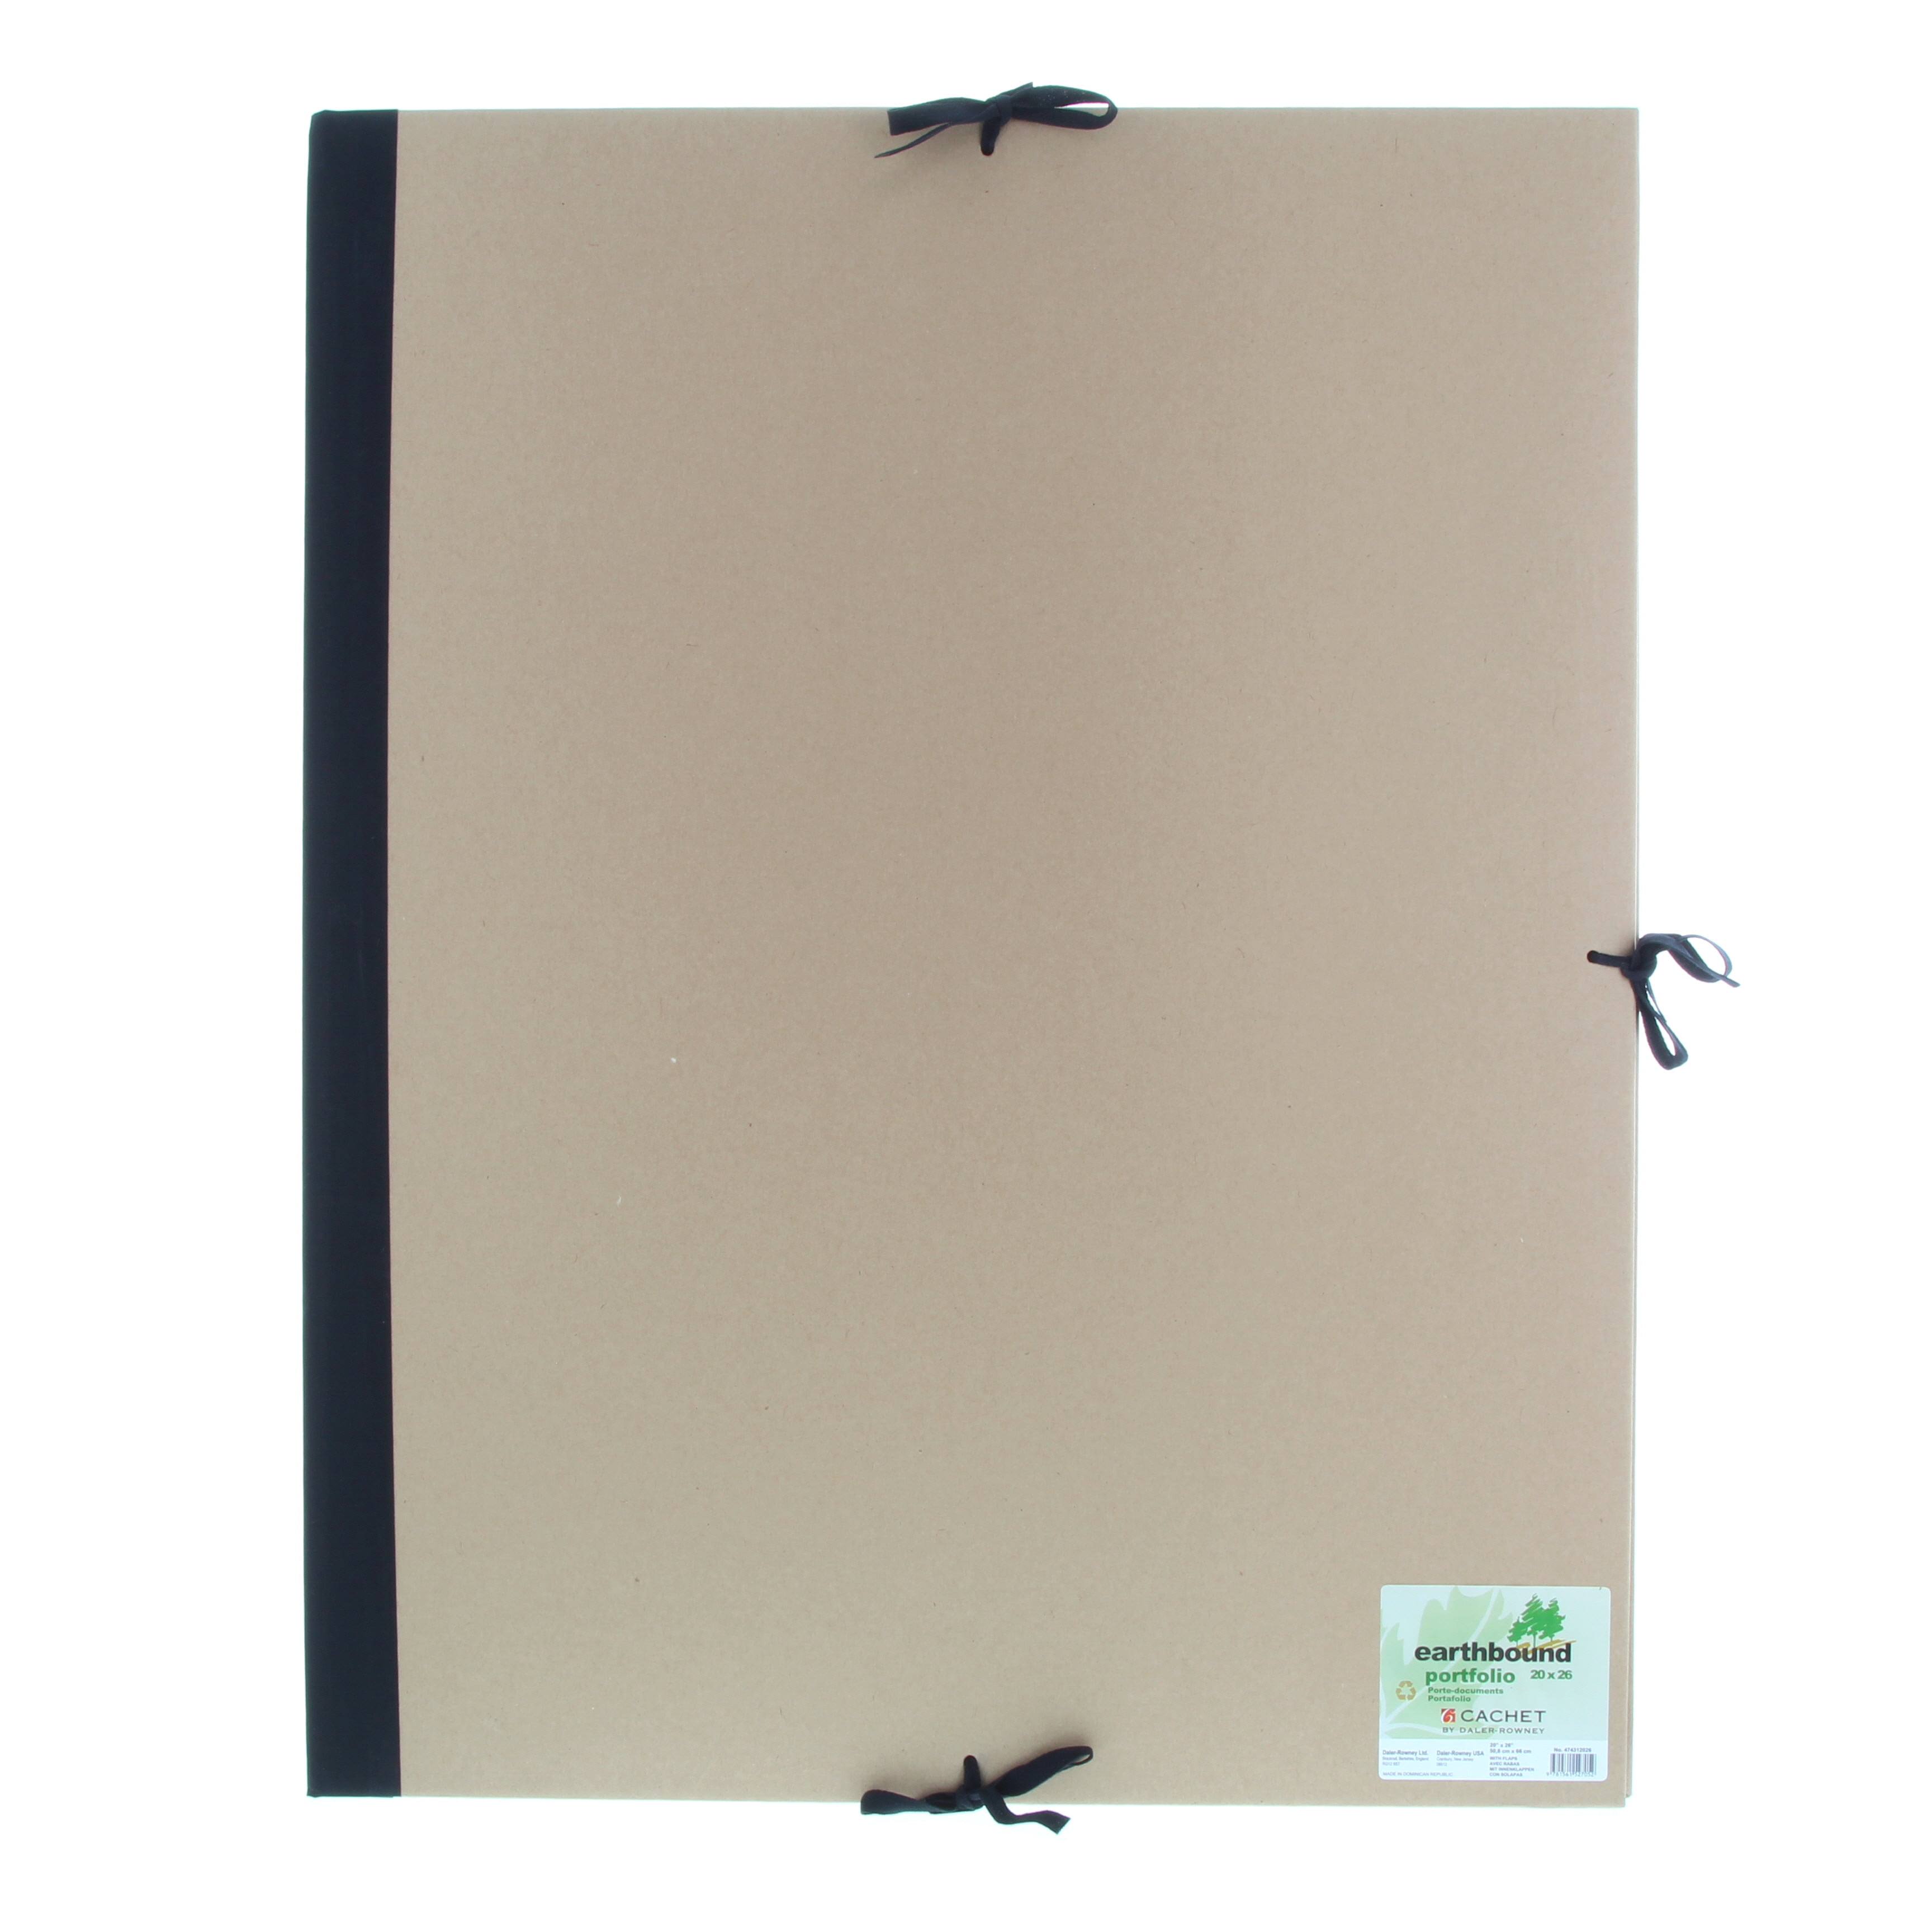  TreochtFUN Art Portfolio 23 X 31, Portfolio Case A2 Heavy duty  Portfolio Folder for Artwork With Shoulder Strap, Art Supply Bag For Large  Painting Board Supplies .(Black) : Arts, Crafts & Sewing